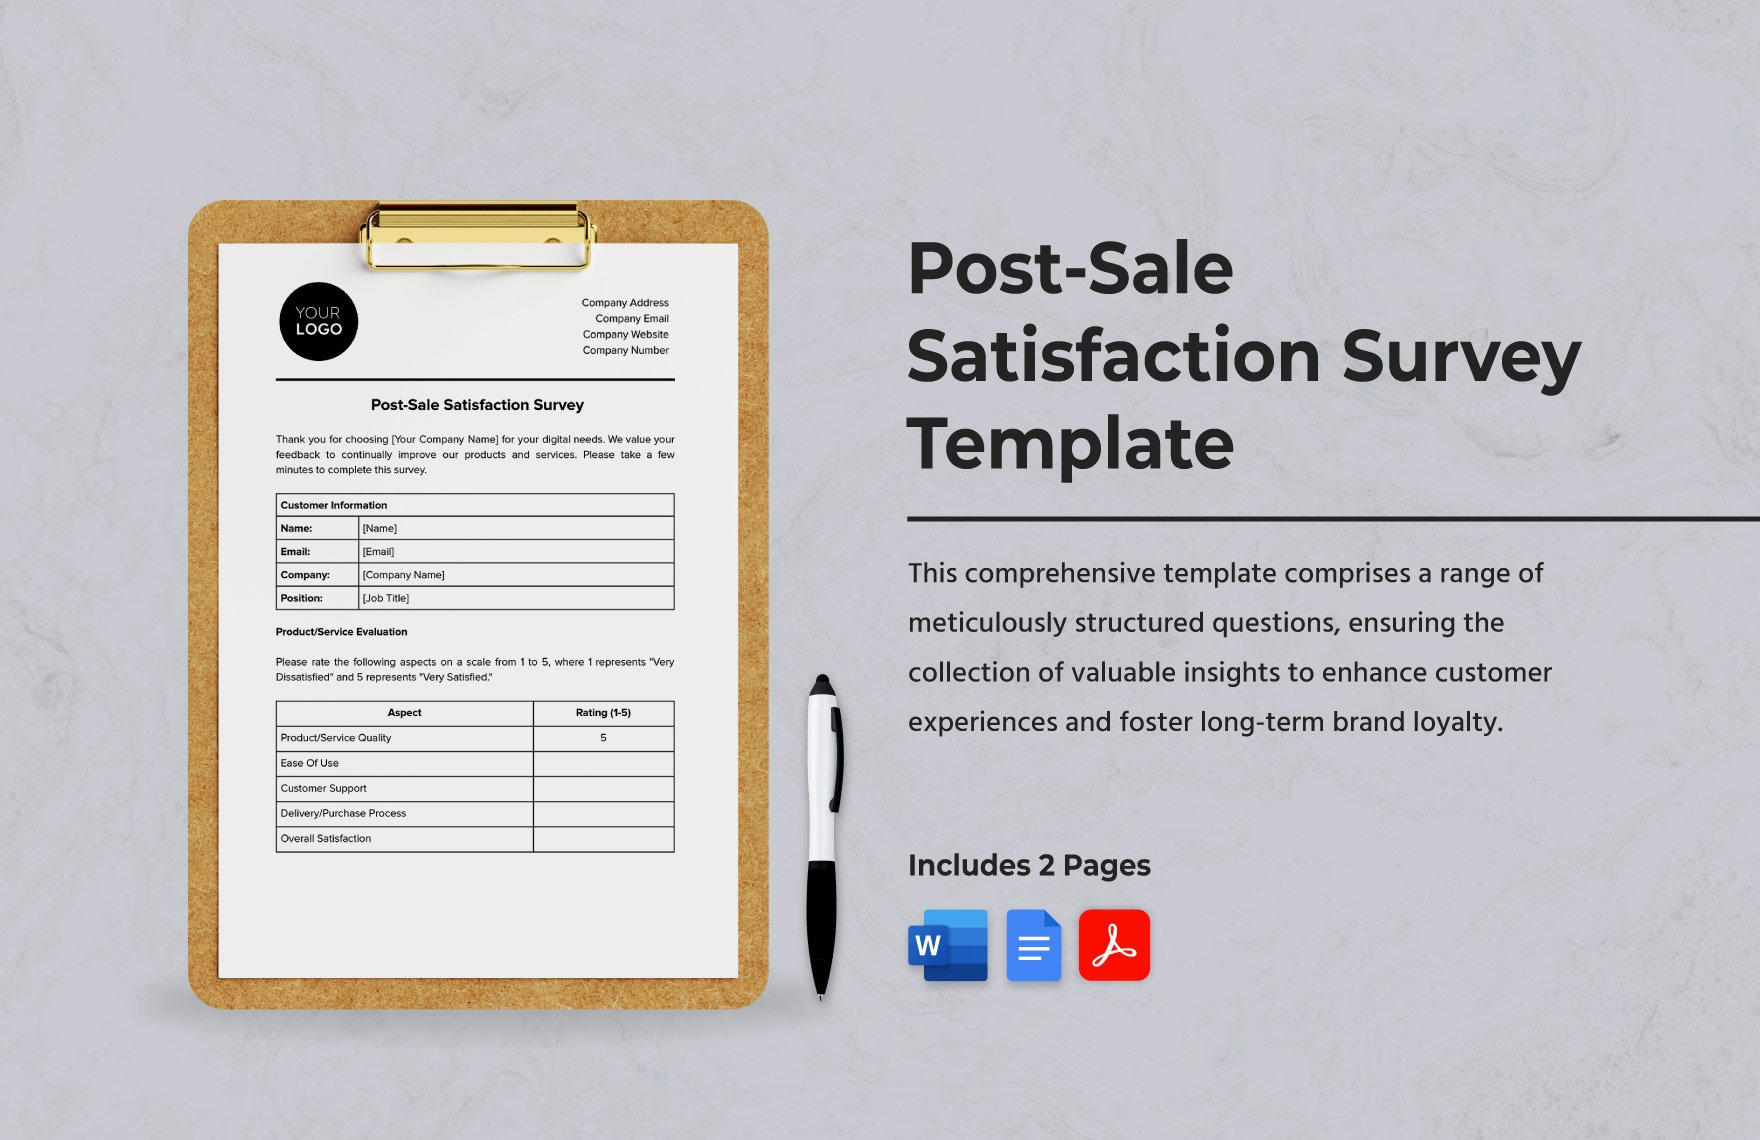 Post-Sale Satisfaction Survey Template